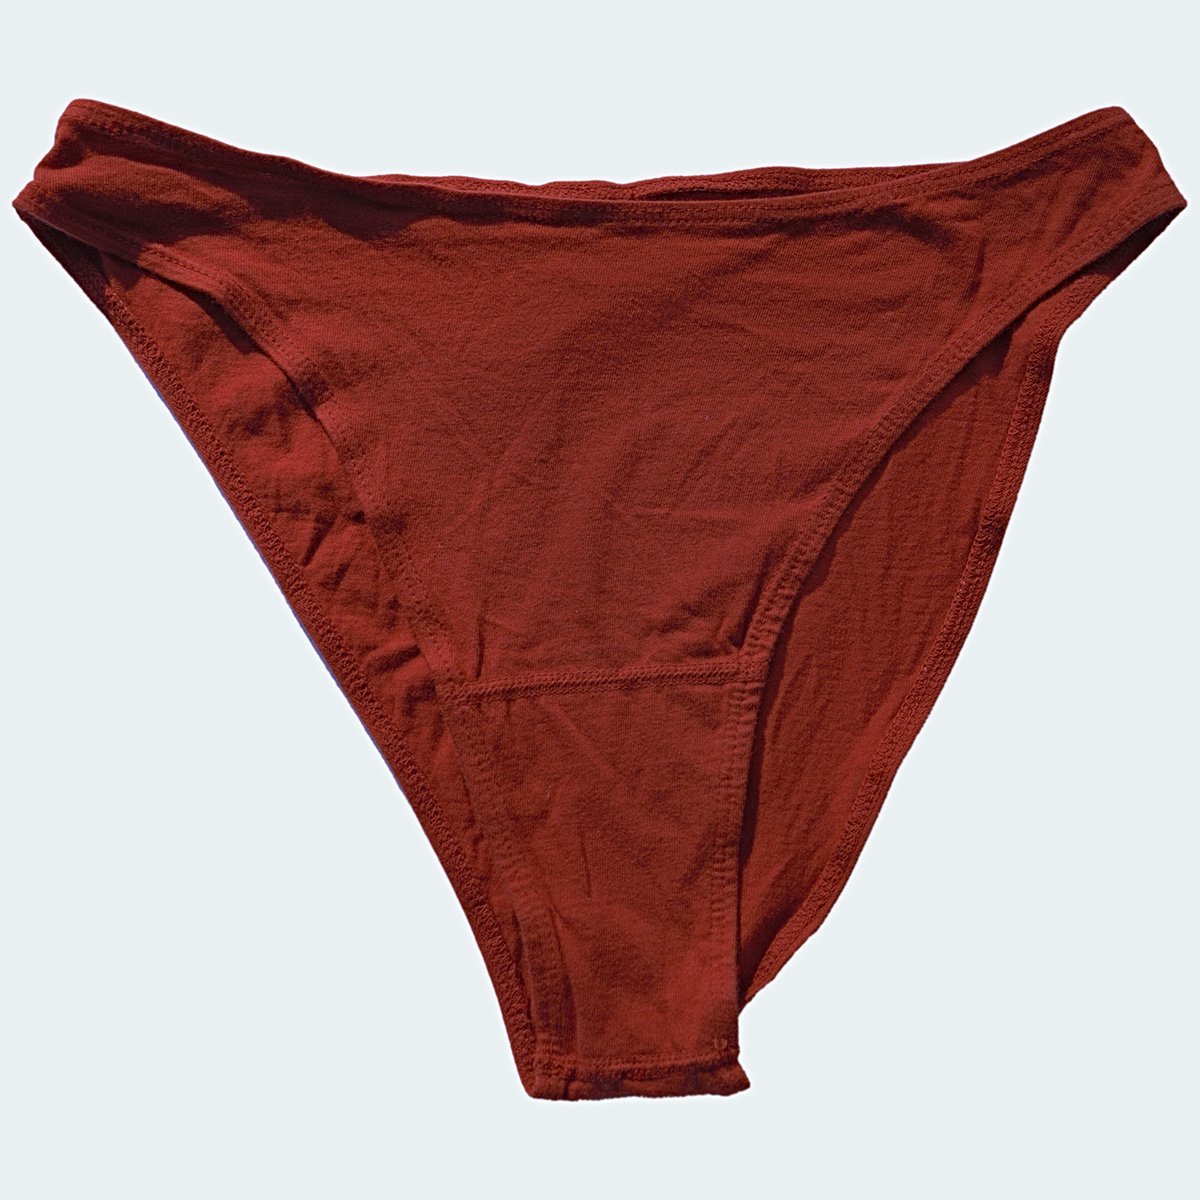 French Cut Panties